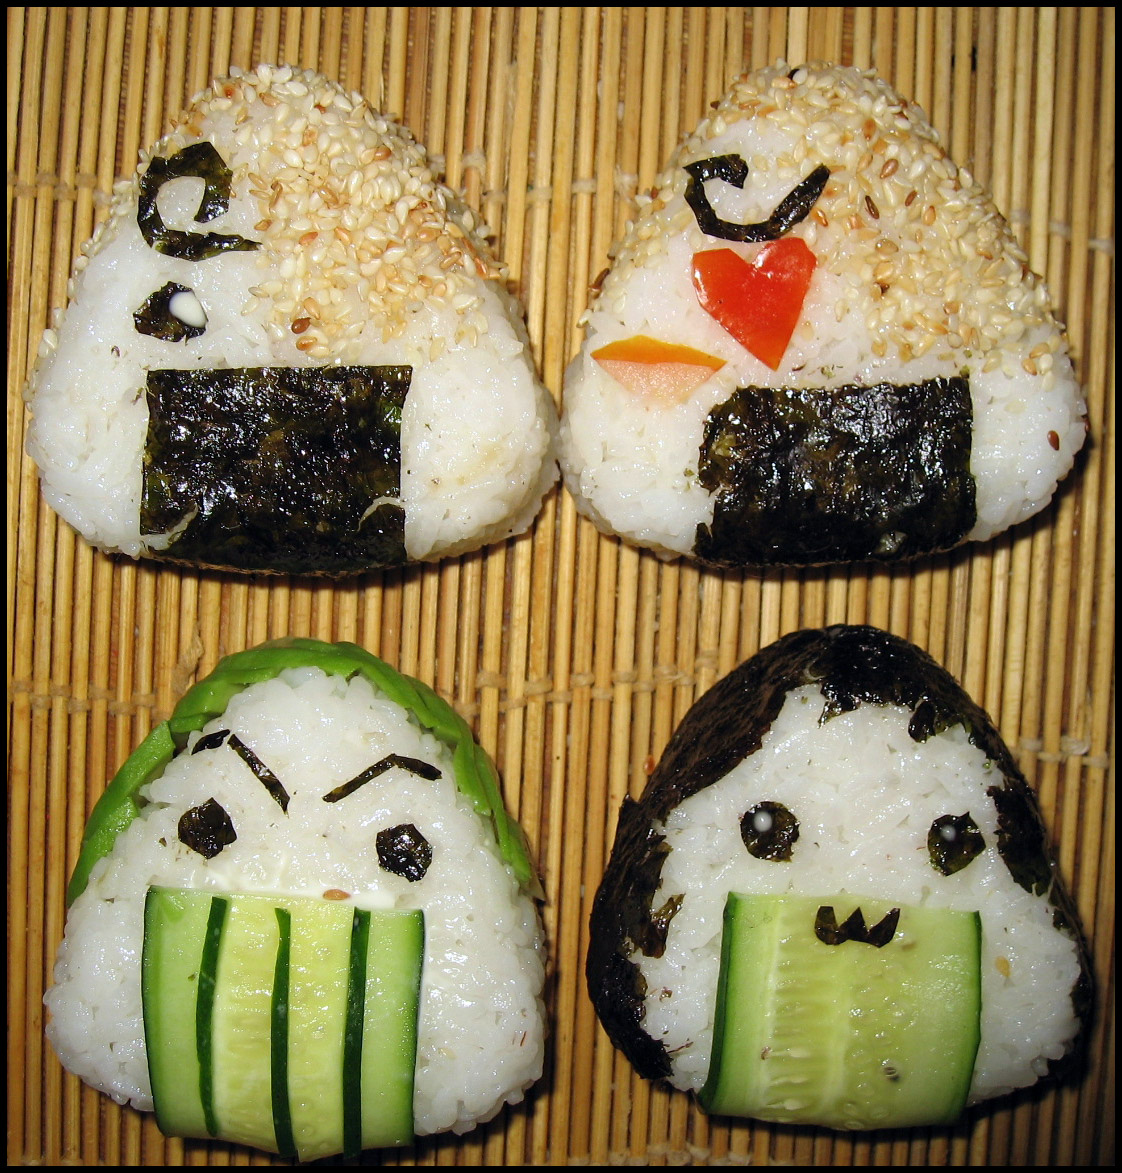 Japon Yemekleri-http://fc02.deviantart.net/fs43/f/2009/118/f/b/Cooking_is_so_fun_XD_Onigiri_by_Rens_twin.jpg